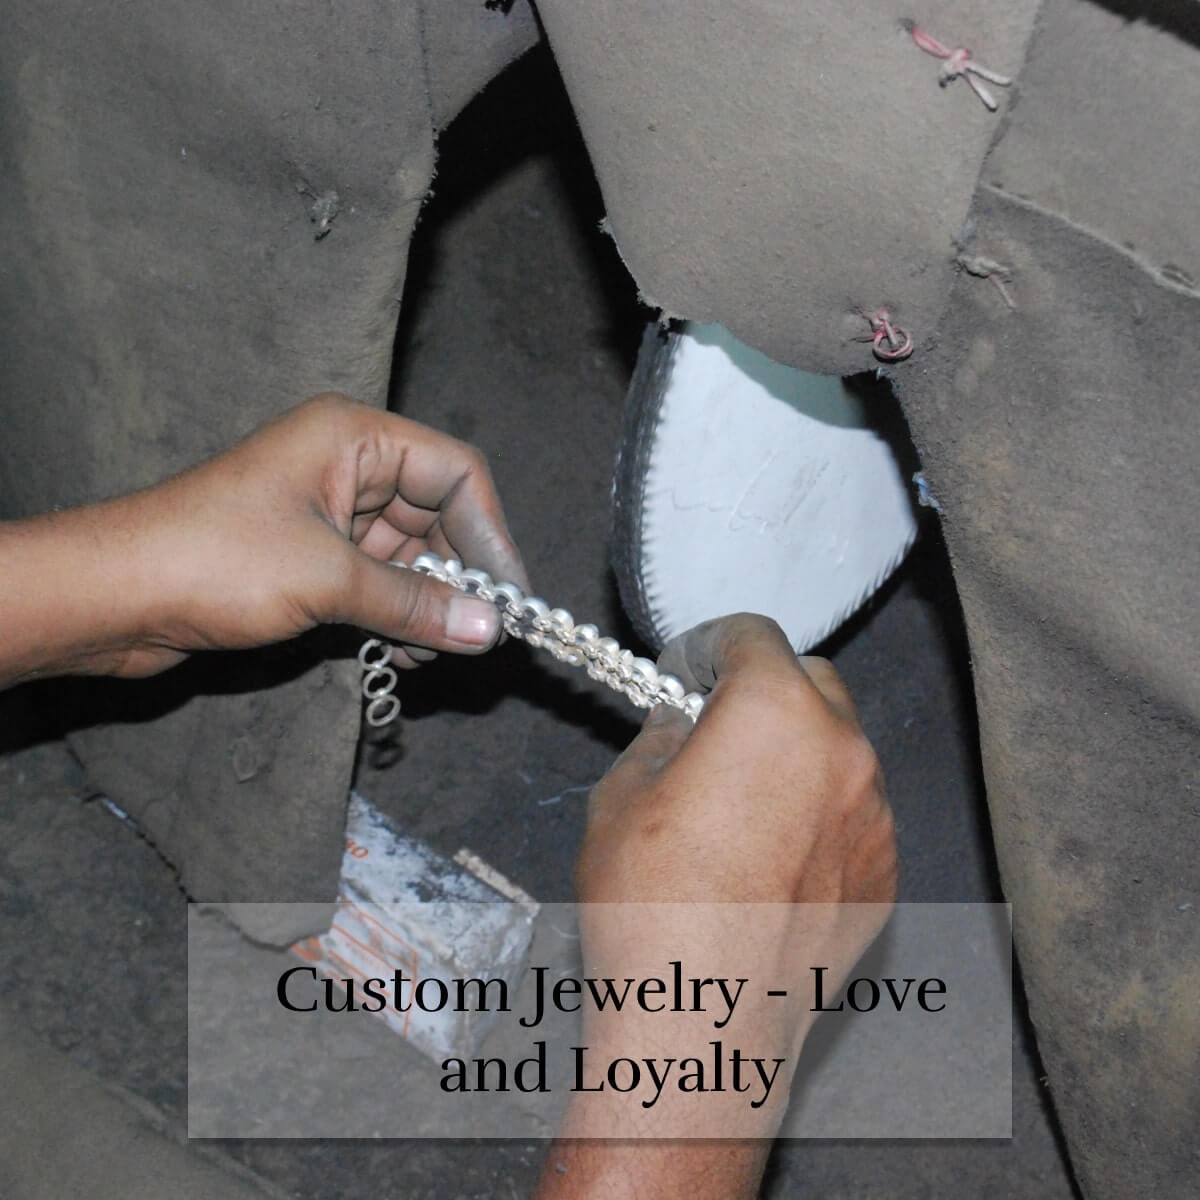 Why is custom jewelry 